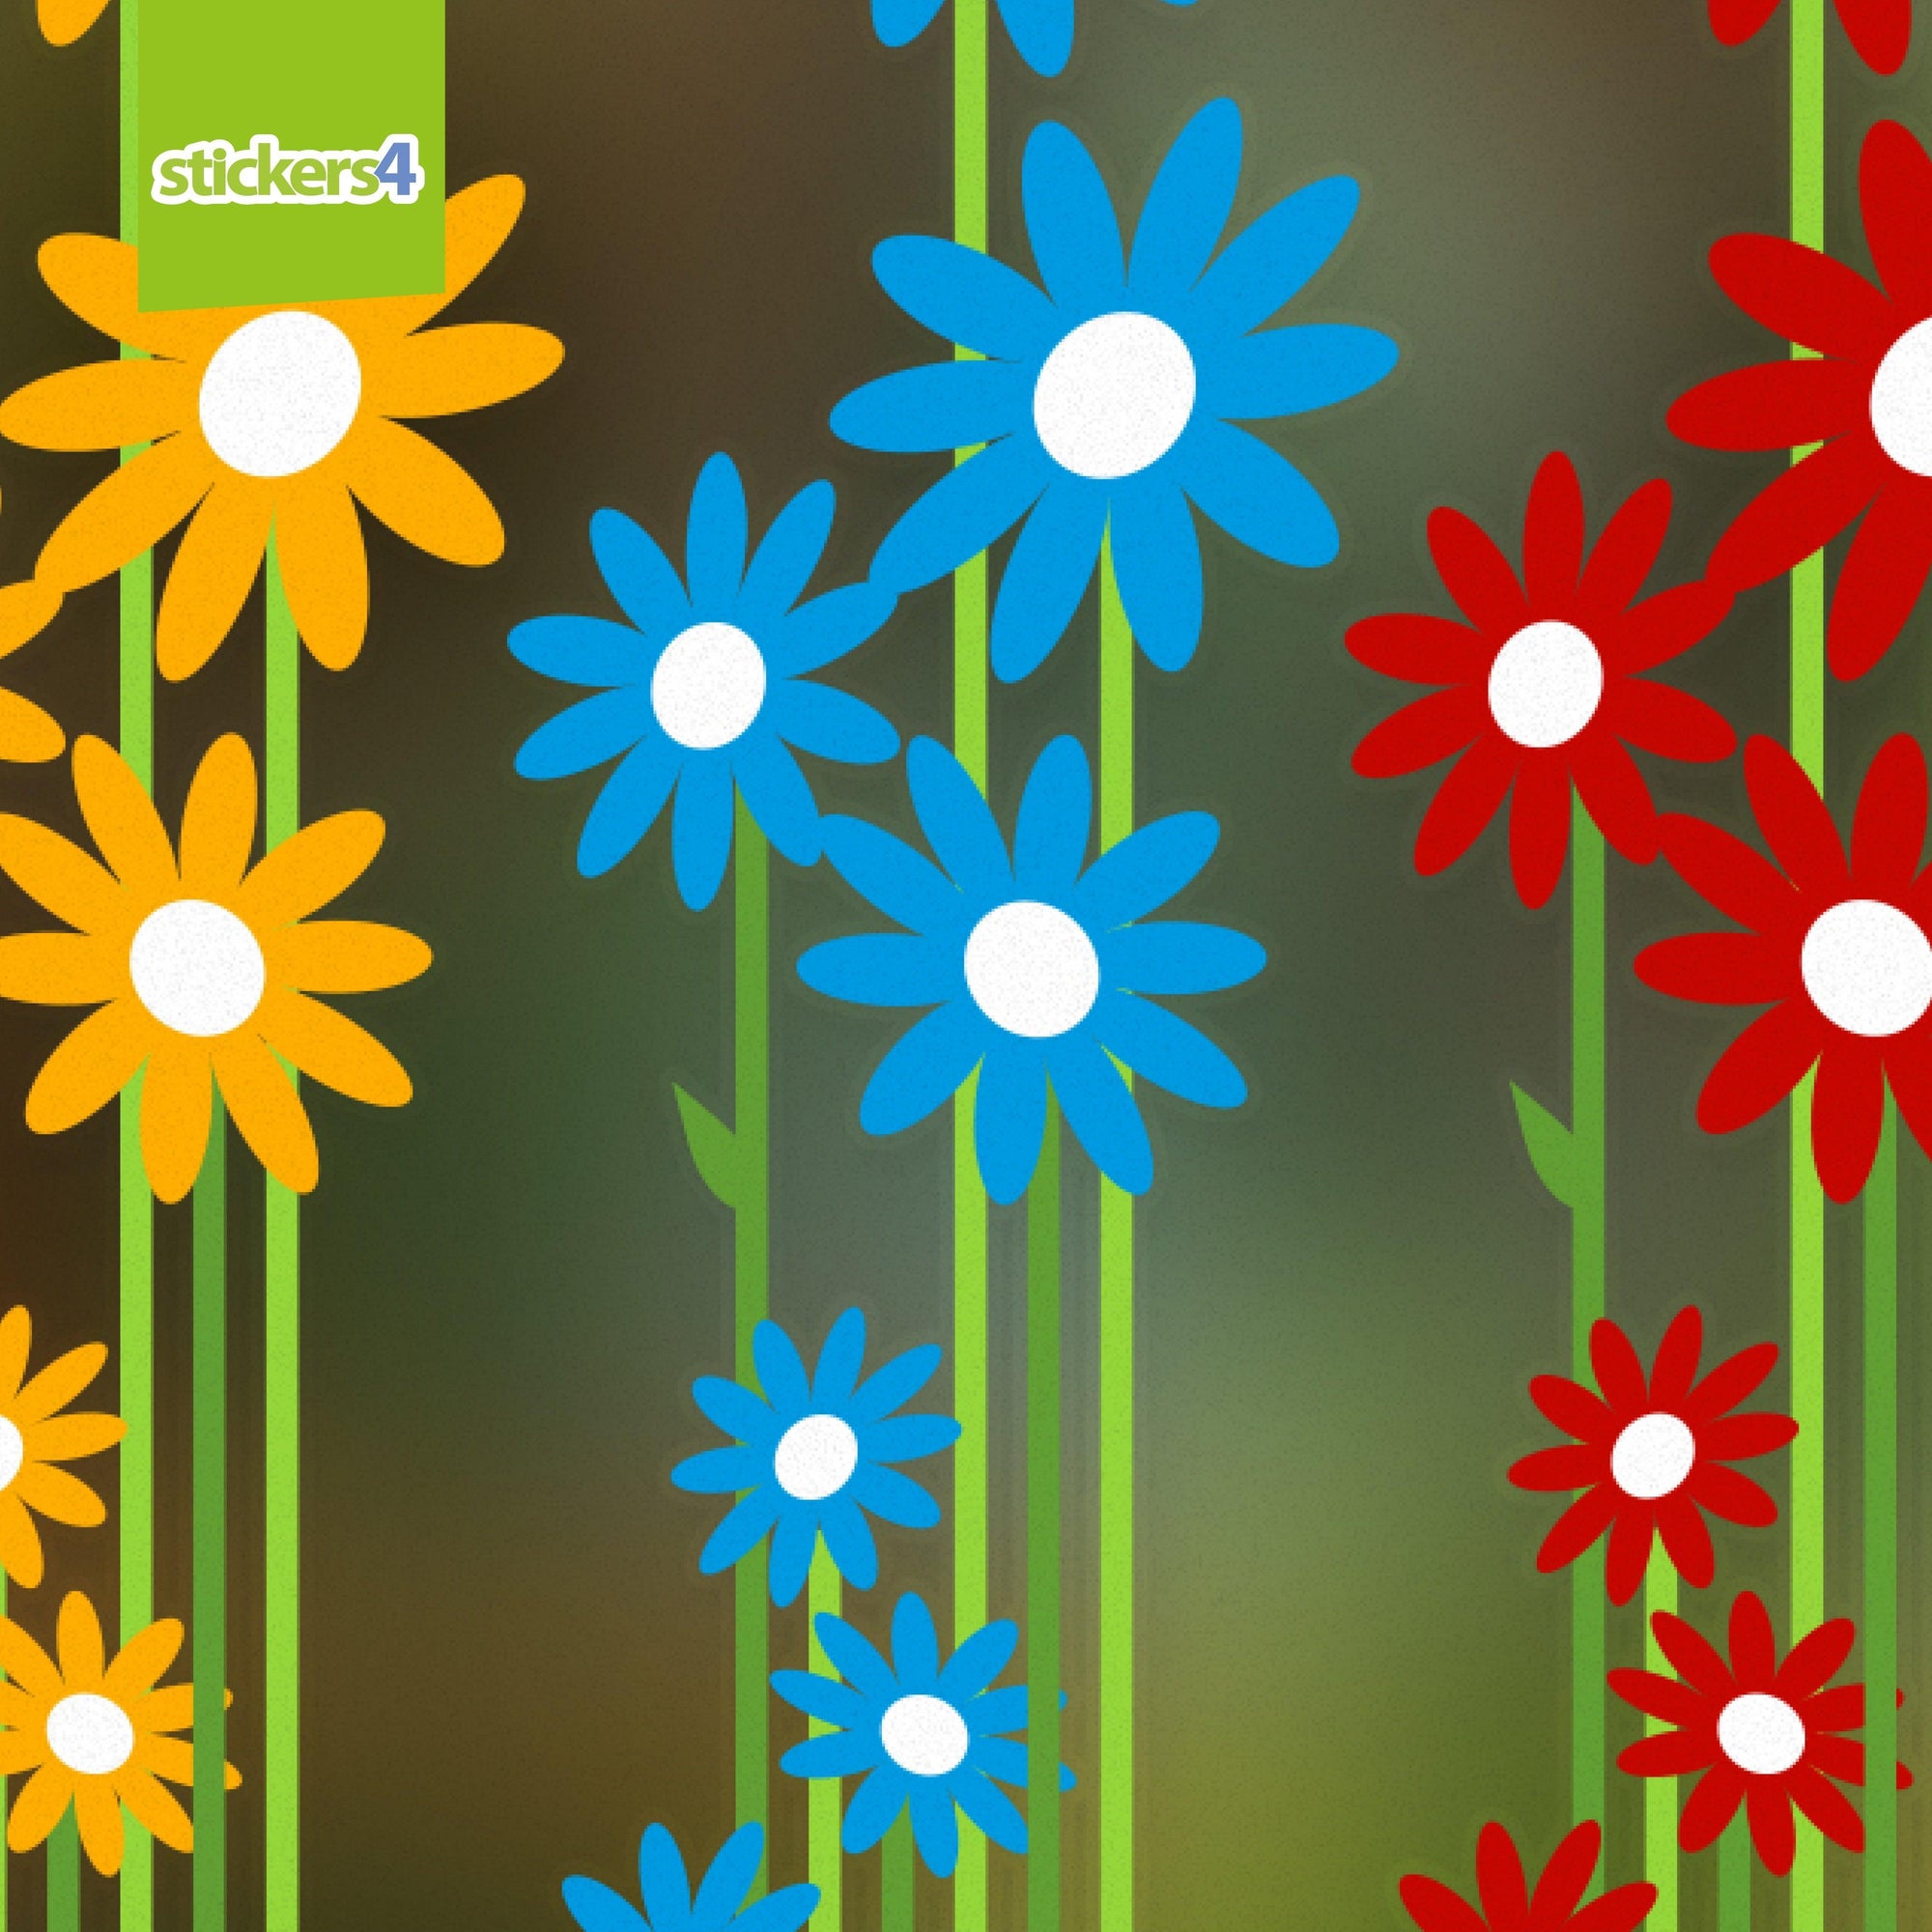 Colourful Daisies with Stems Window Sticker Seasonal Window Display